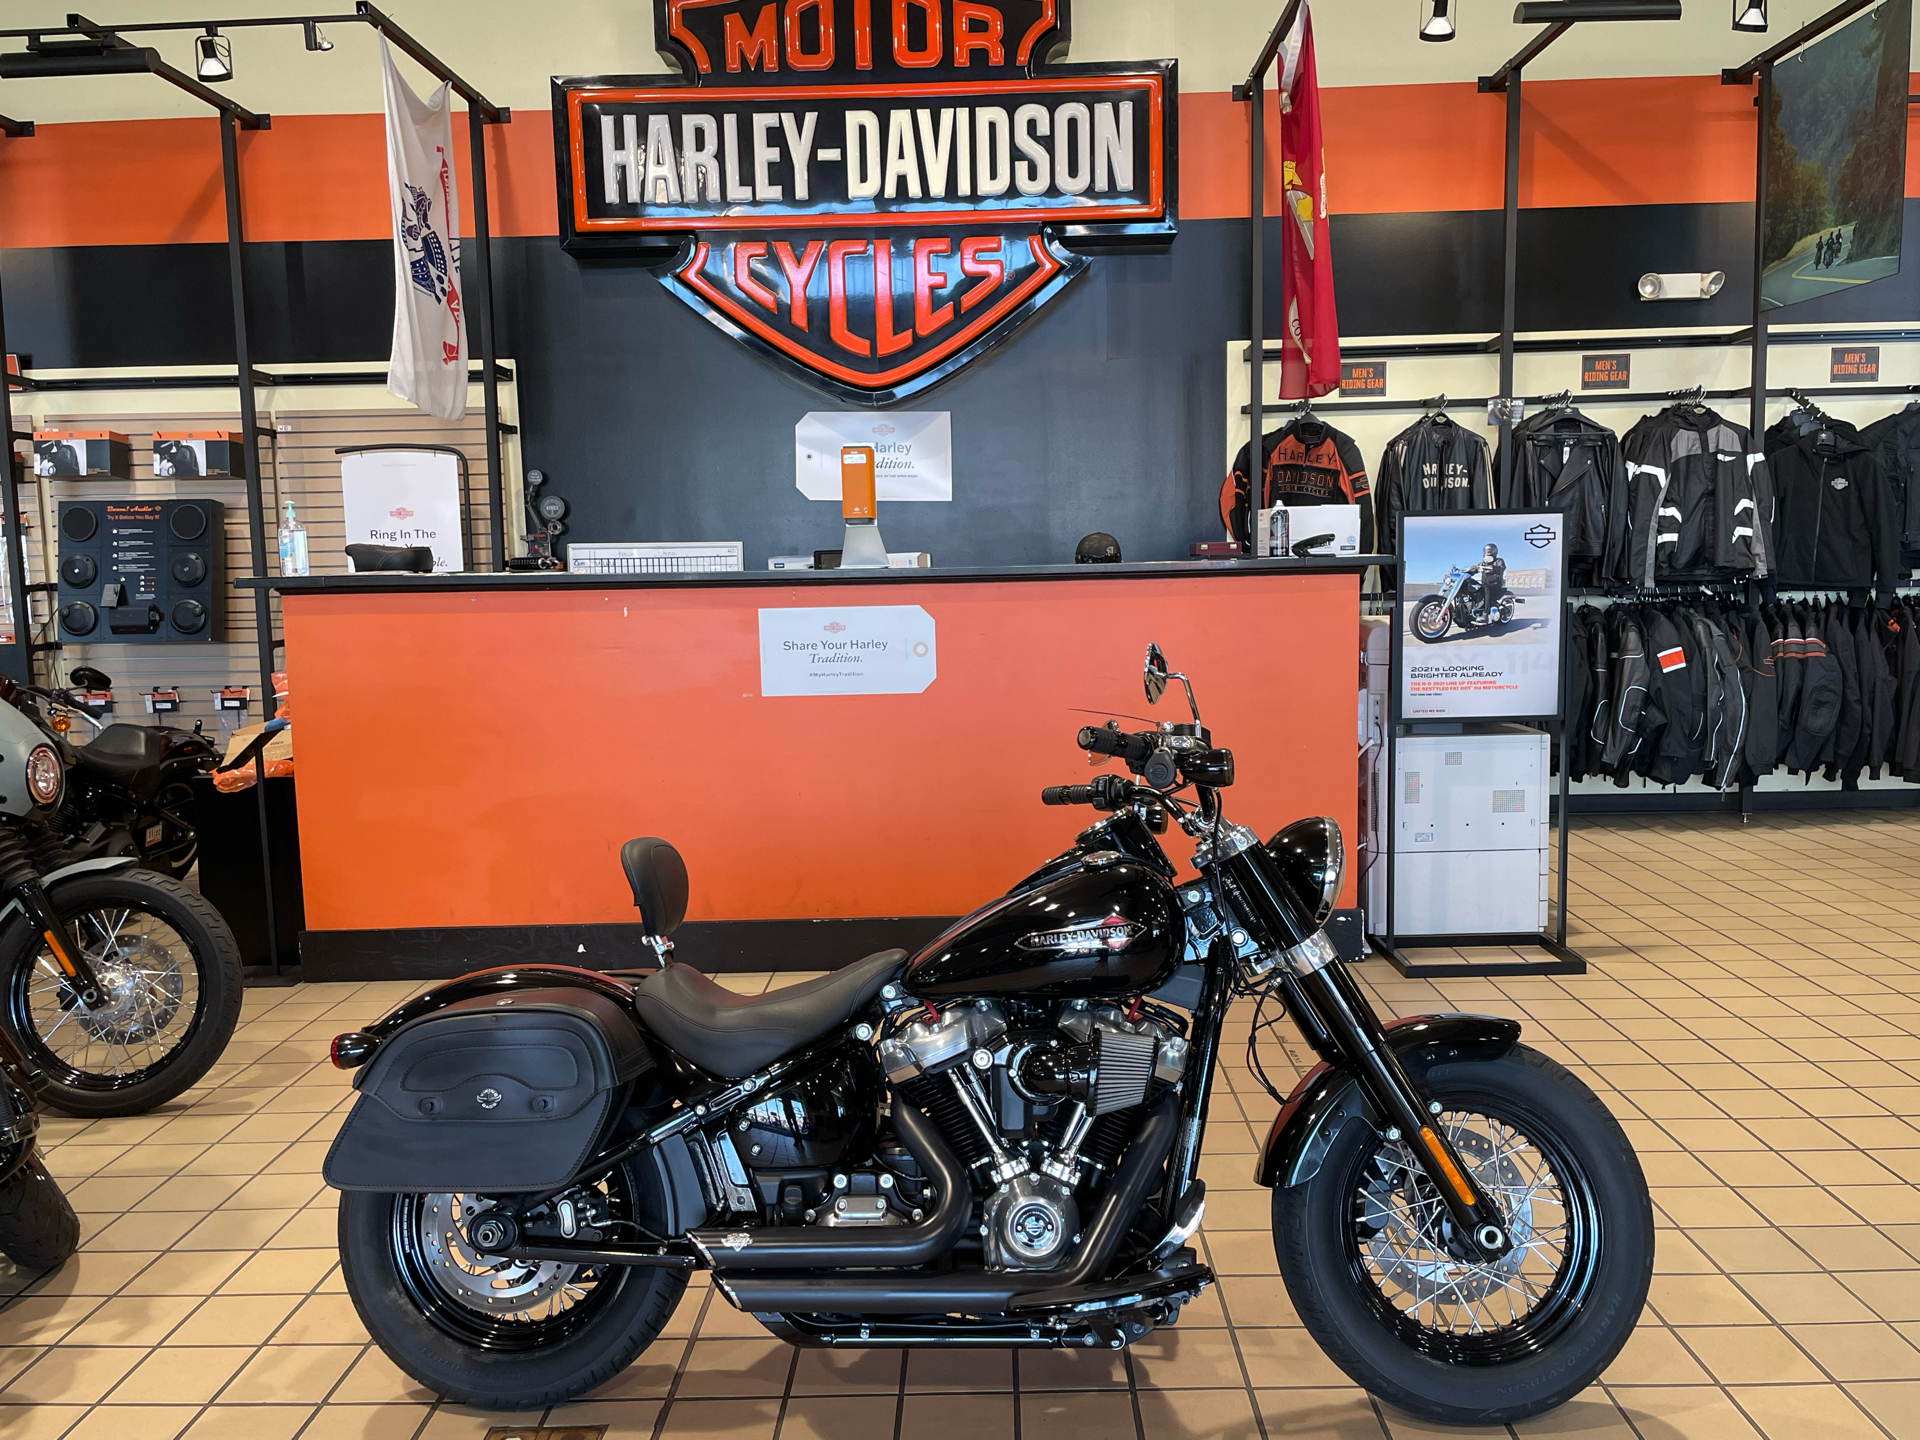 2019 Harley-Davidson Softail Slim® in Dumfries, Virginia - Photo 1